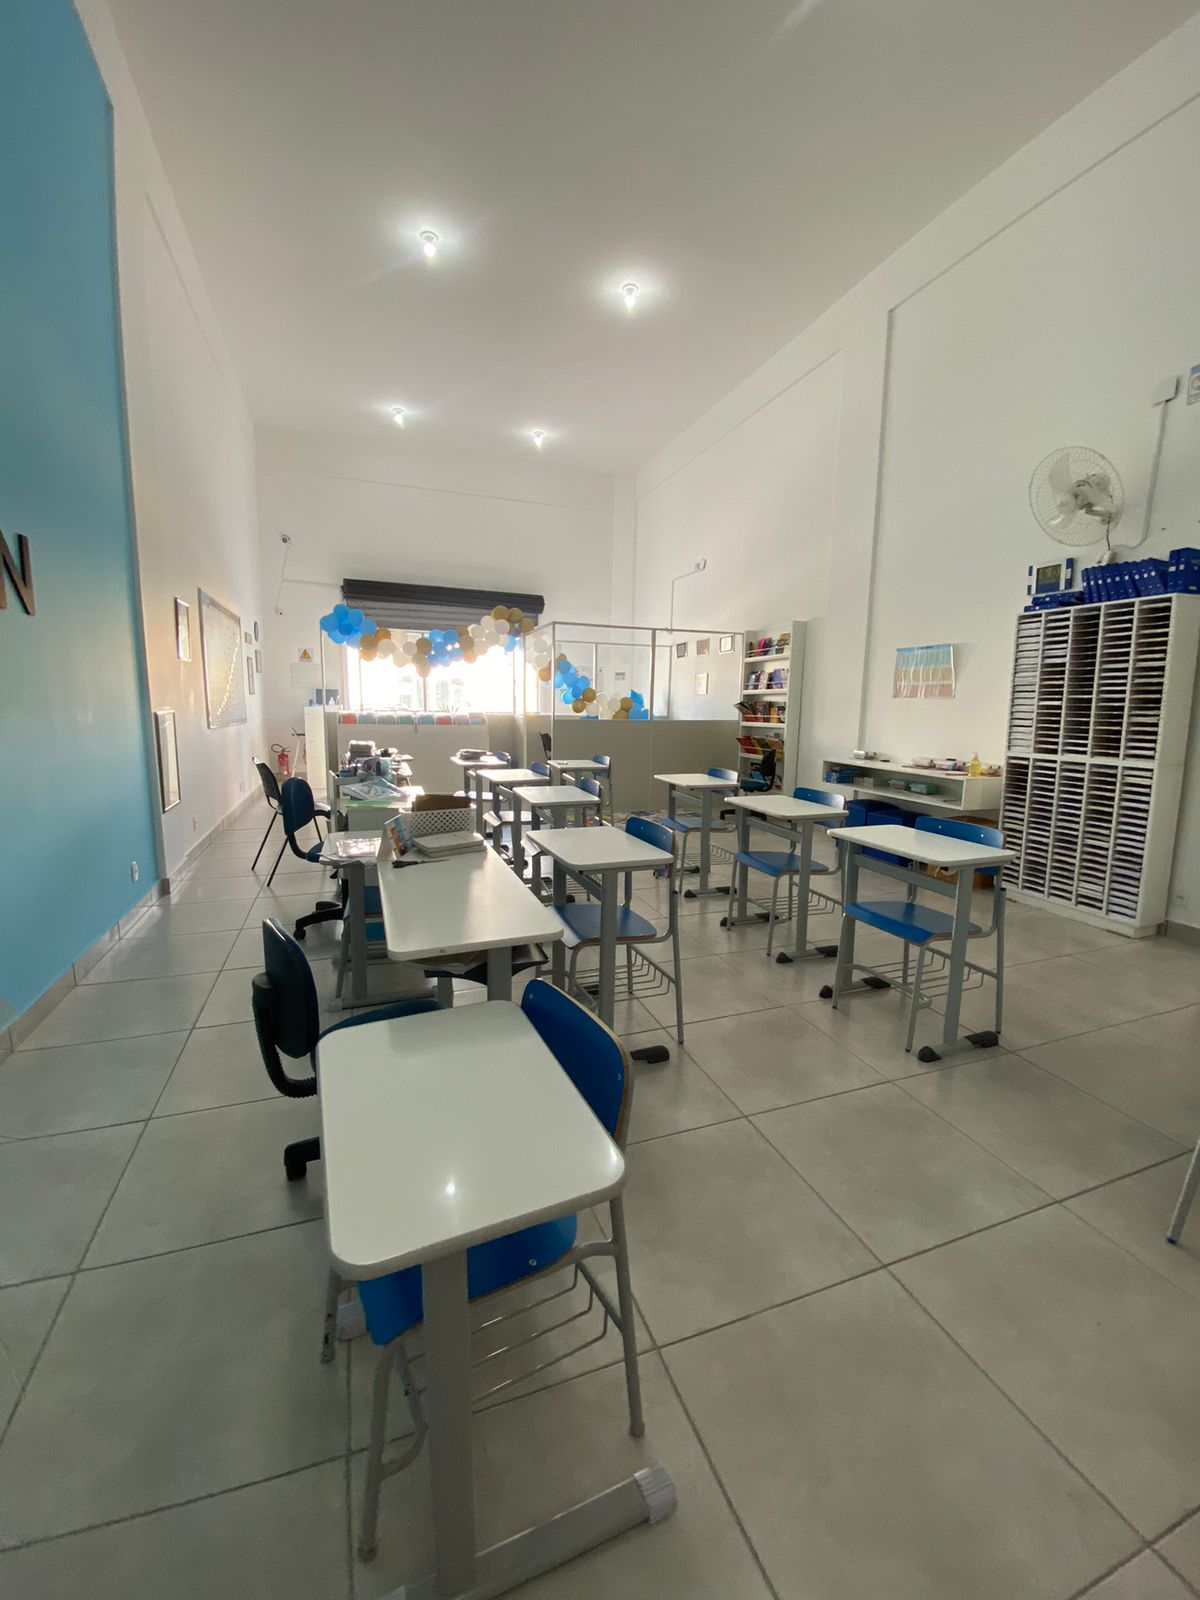 Sala de aula do Kumon Pindamonhangaba-Centro-SP